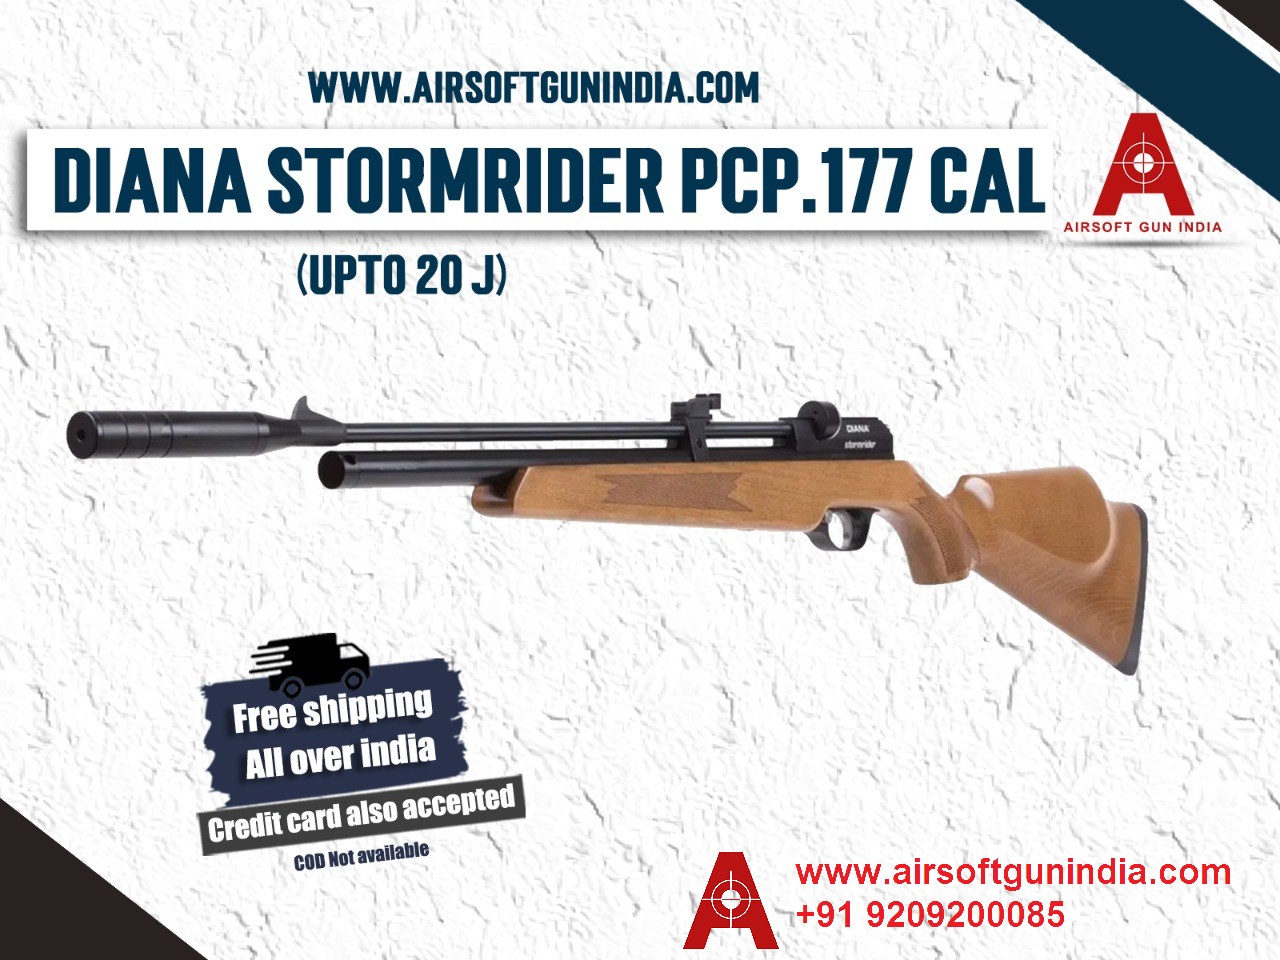 Diana Stormrider .177 Cal, 4.5mm PCP Air Rifle By Airsoft Gun India